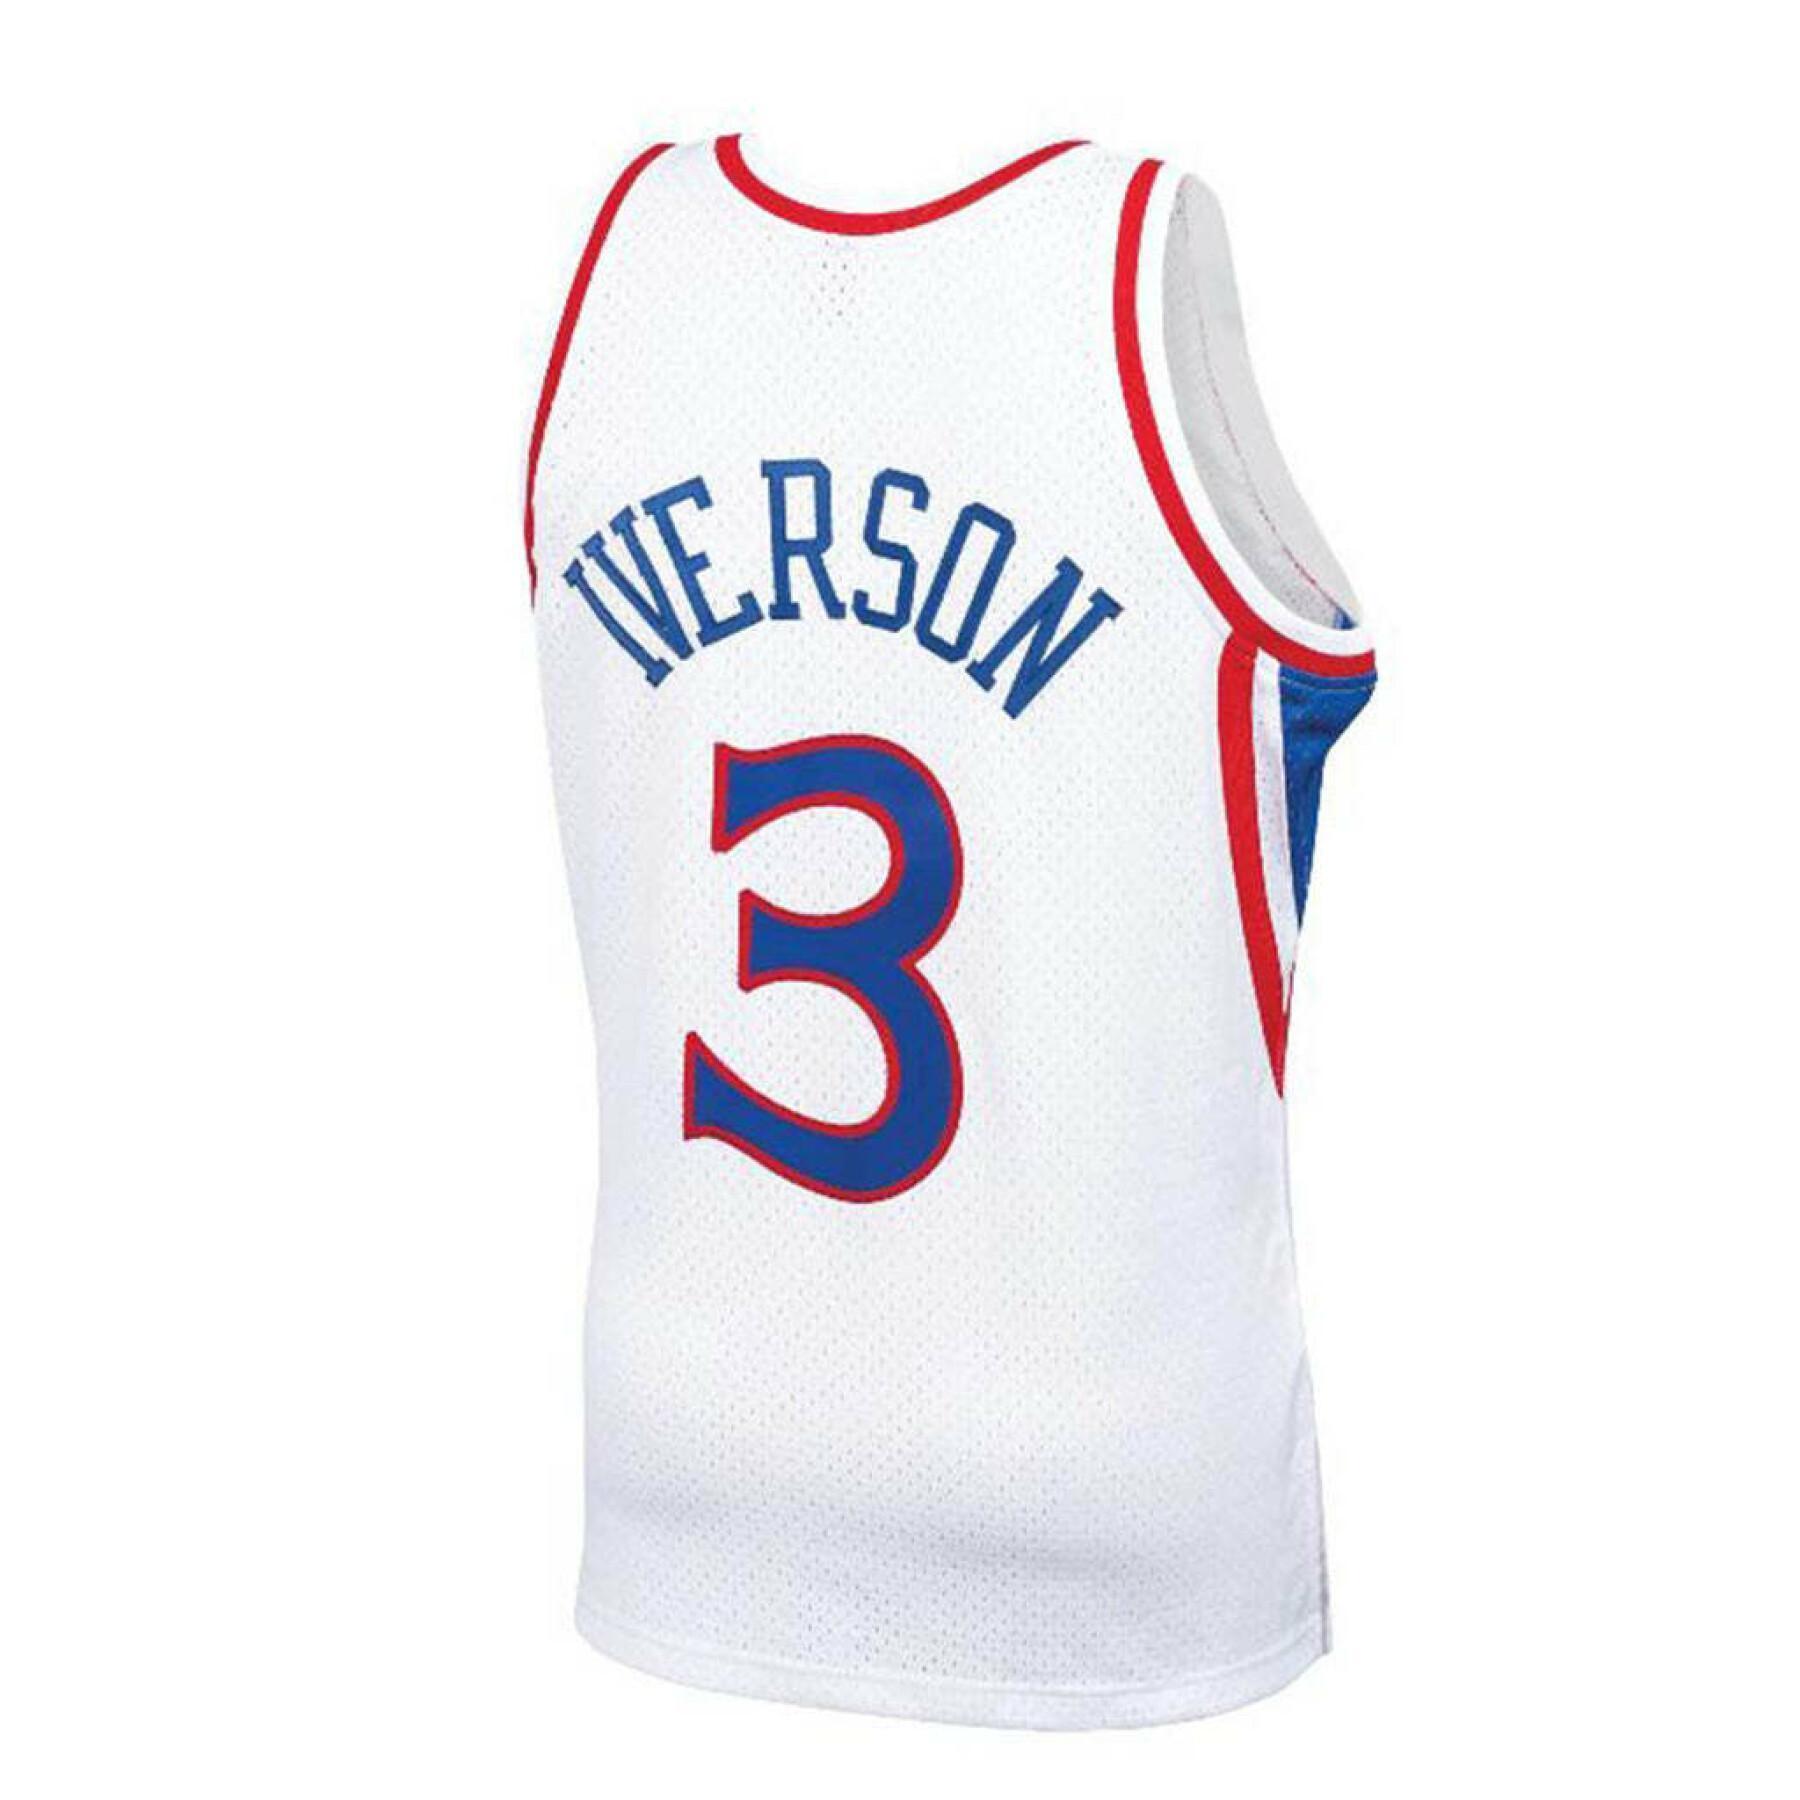 Home jersey Philadelphia 76ers nba authentic Allen Iverson